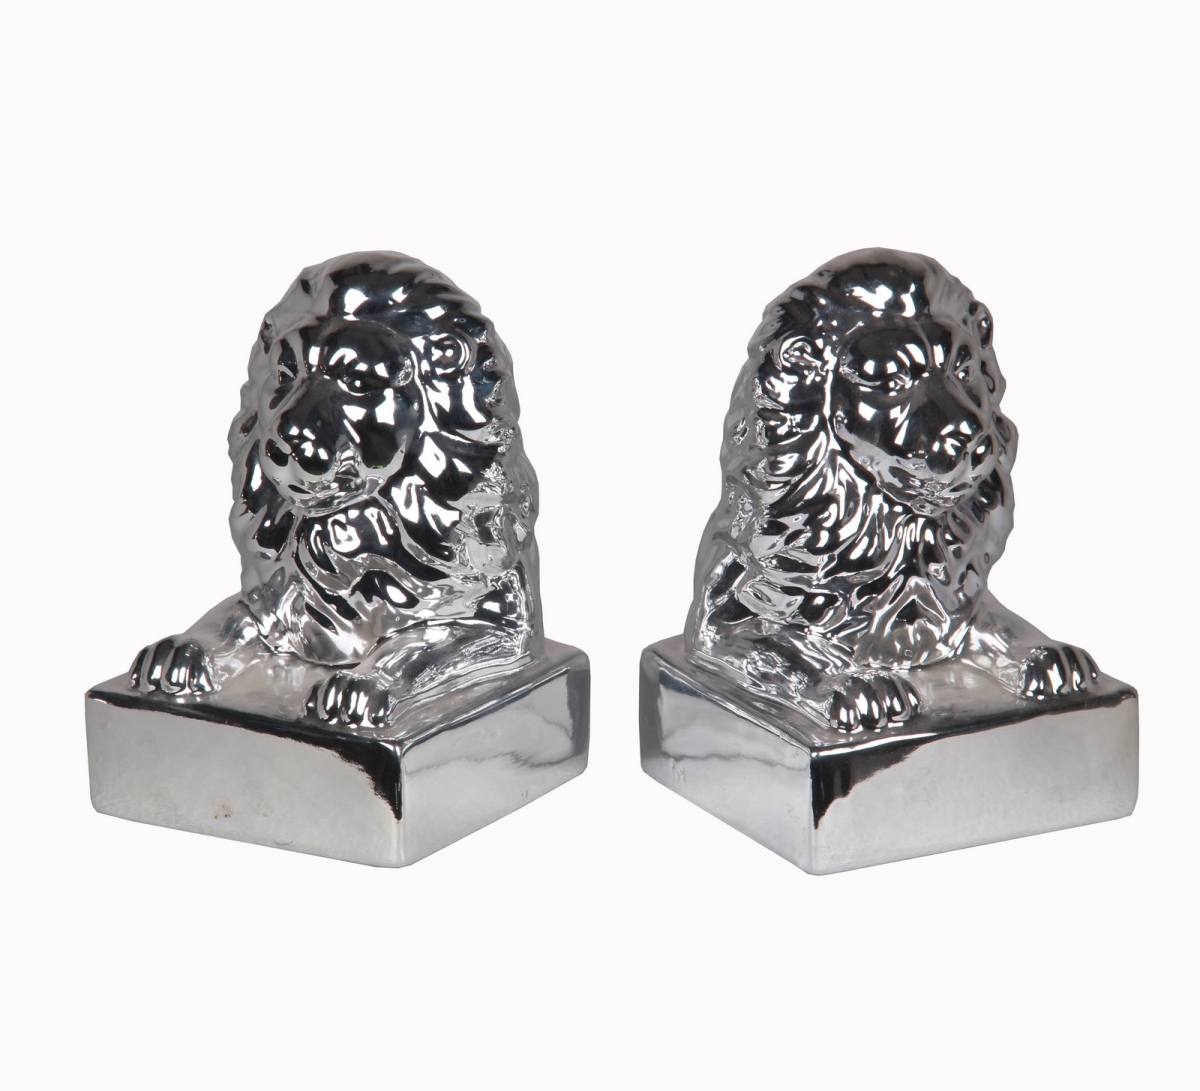 84123 5 X 5 X 7.5 In. Lion Head Bookends, Metallic Silver - 2 Piece